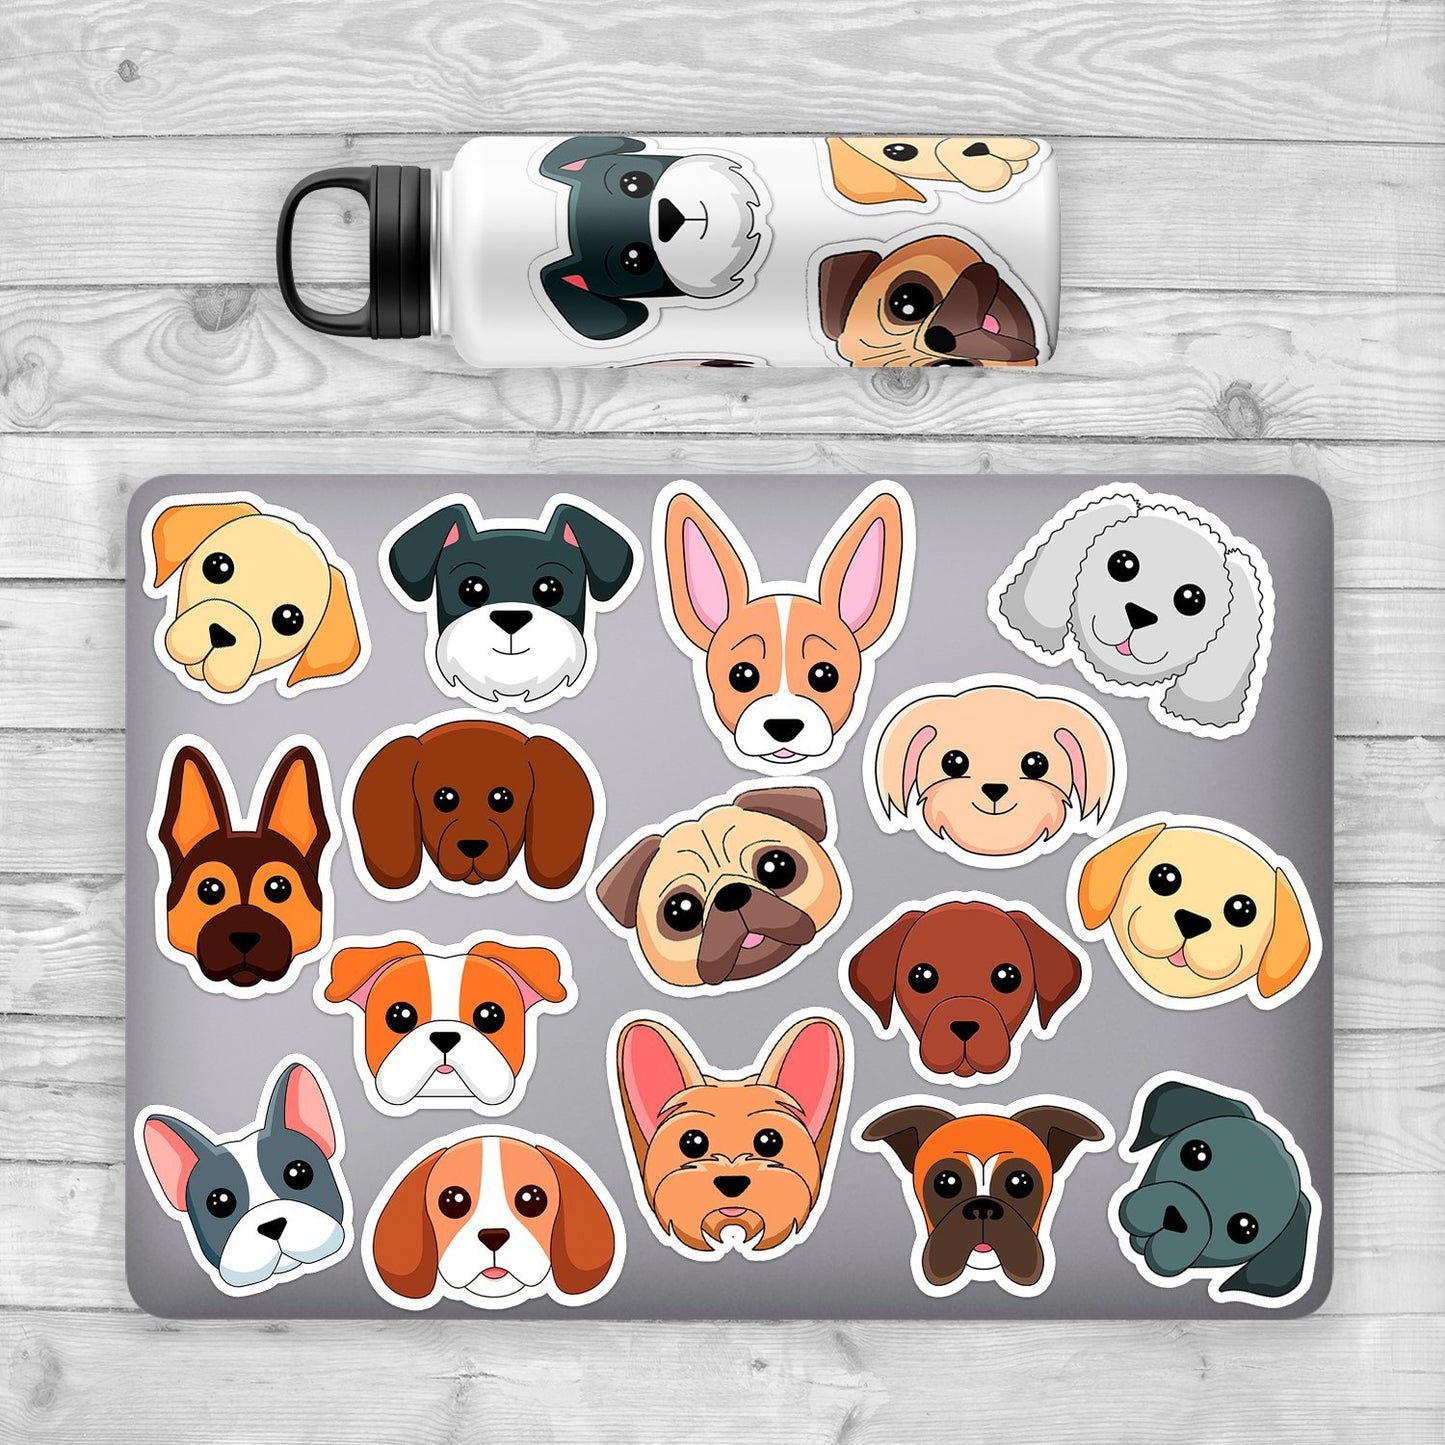 French Bulldog Sticker - Dogstickers.co